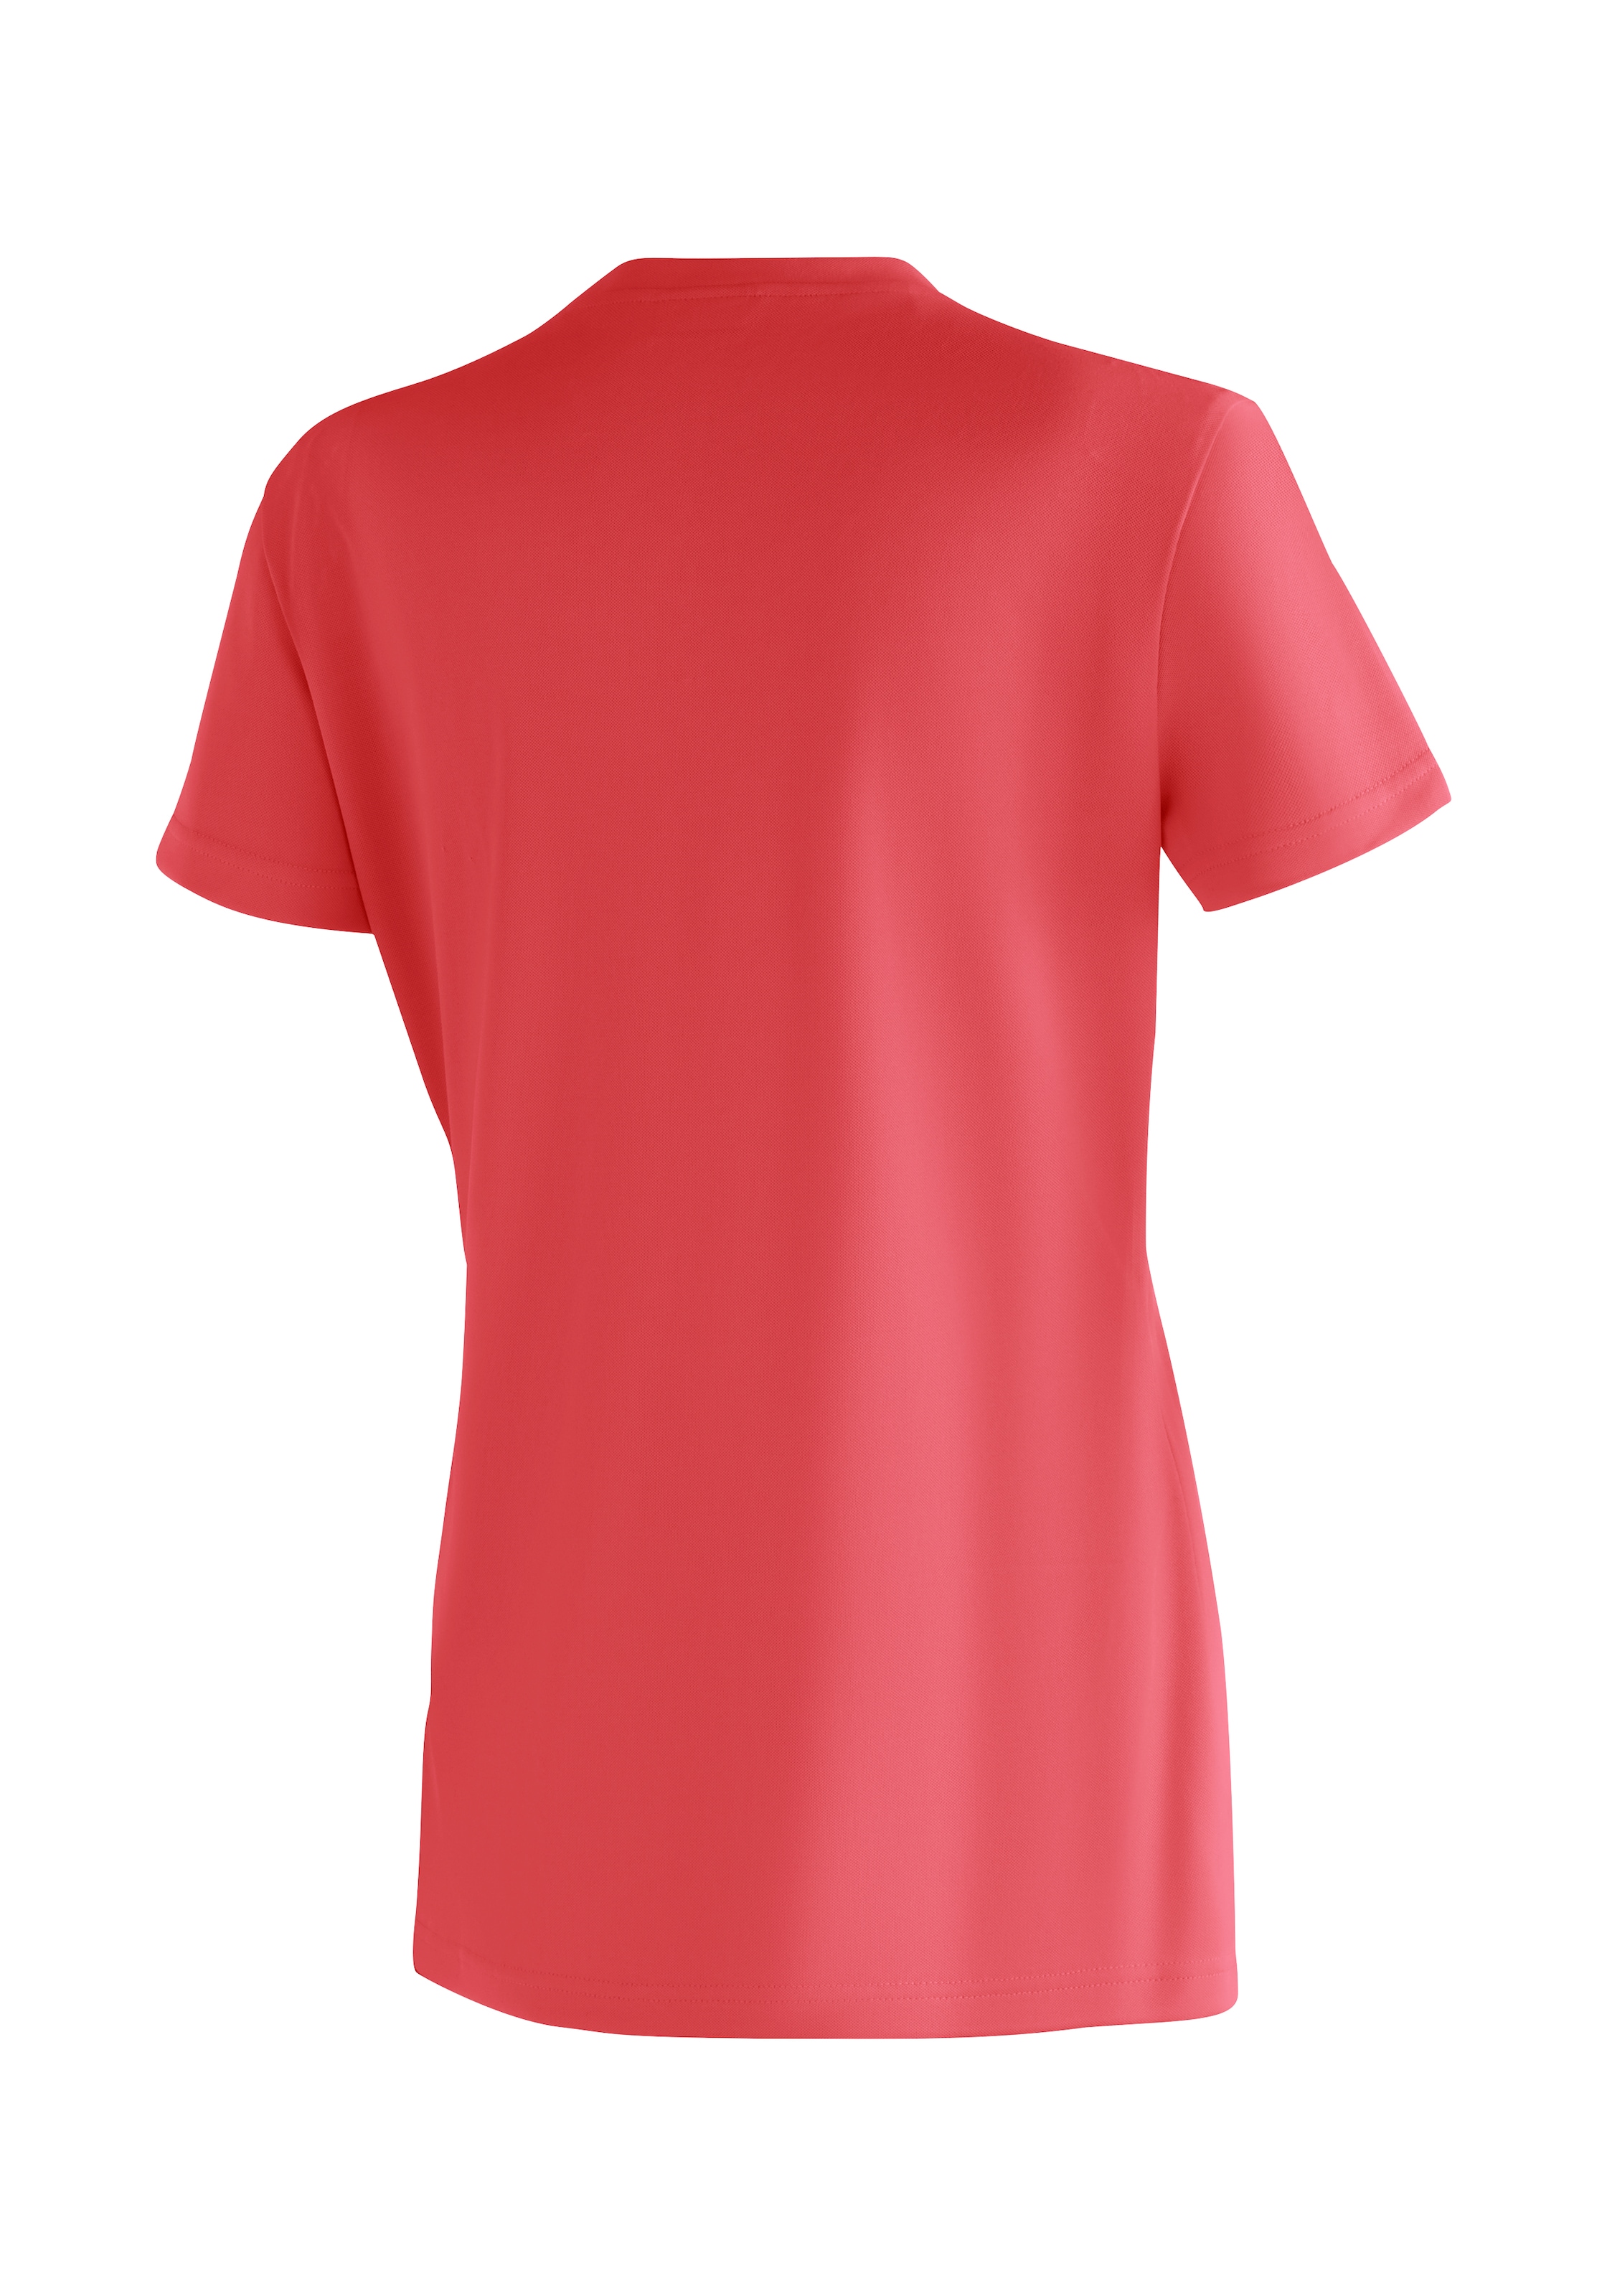 hoher mit Maier Funktional T- Print«, Passformstabilität shoppen »Waltraut Funktionsshirt Sports vielseitiges Shirt